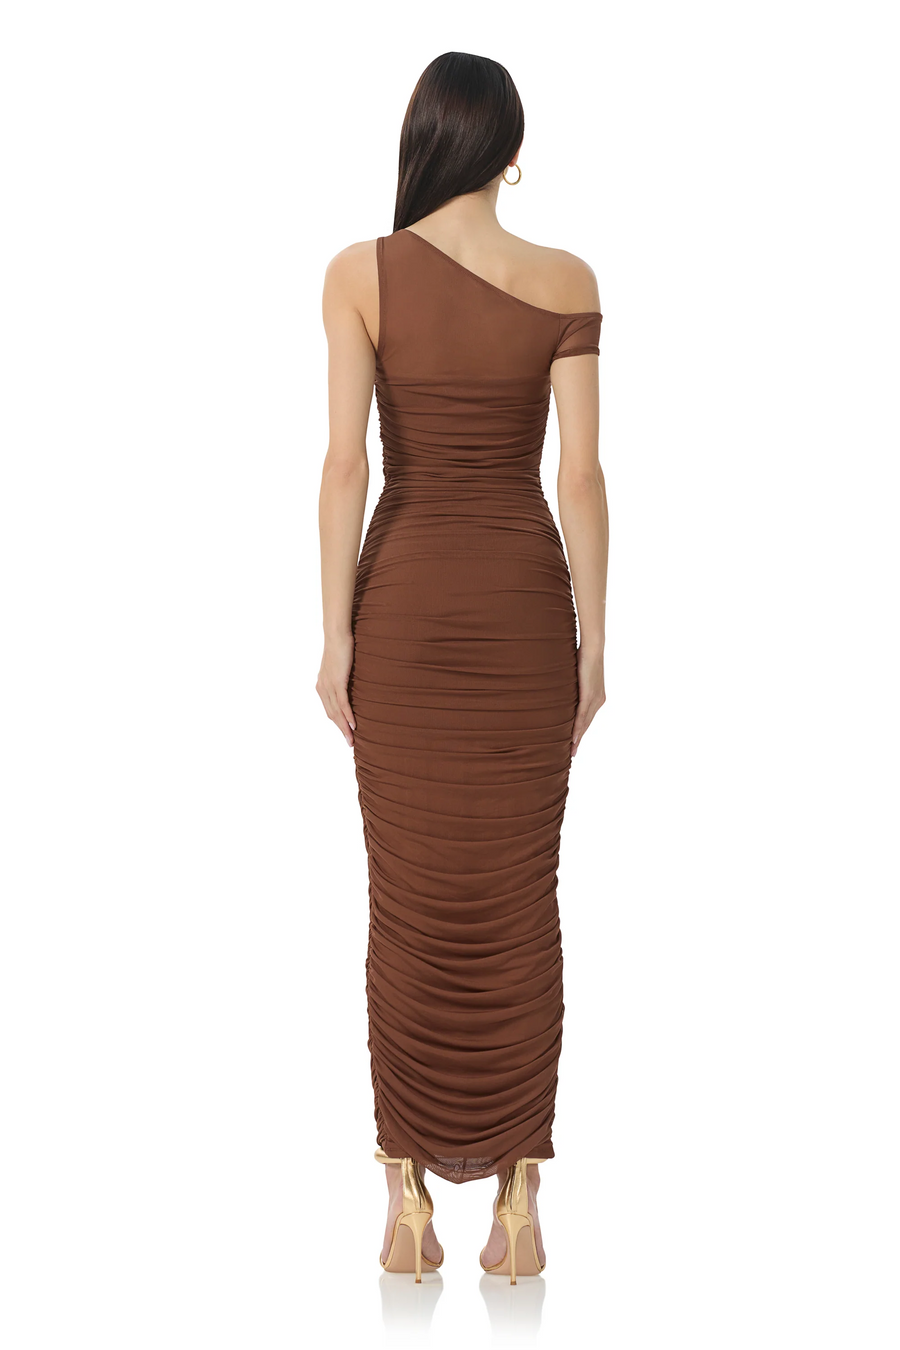 Biona Dress by AFRM